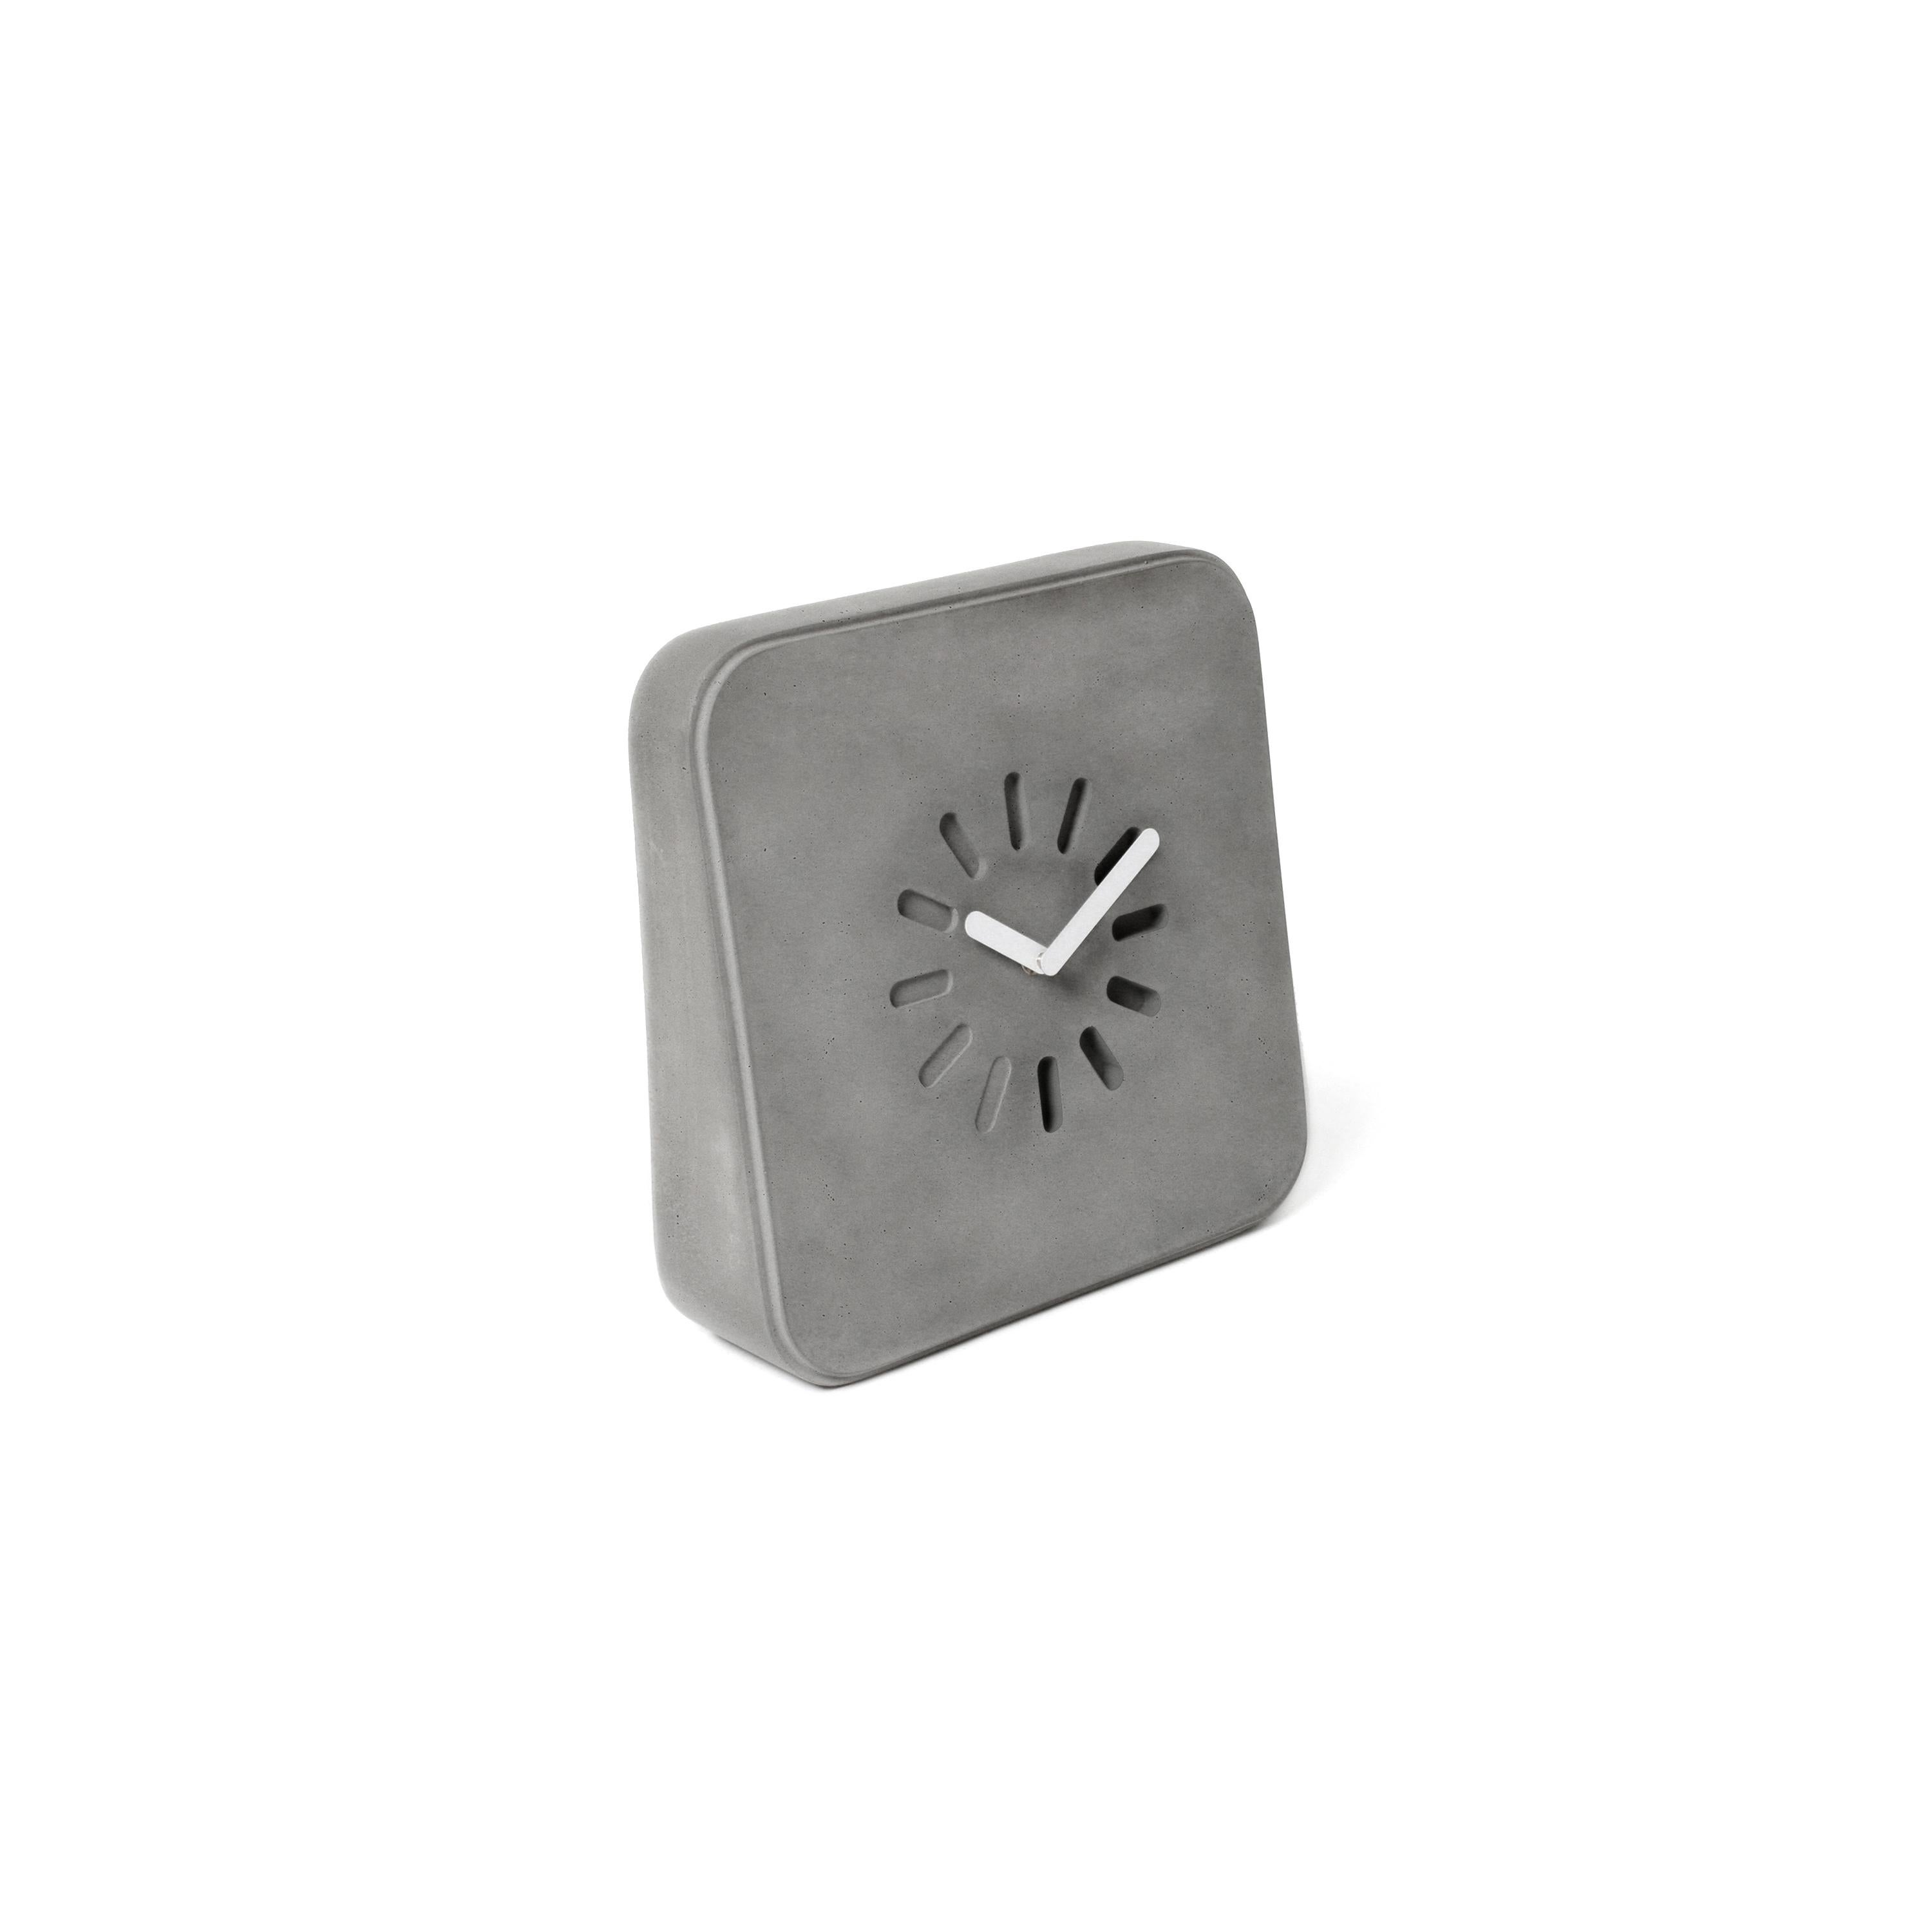 Concrete Low Tech Life in Progress Clock For Sale